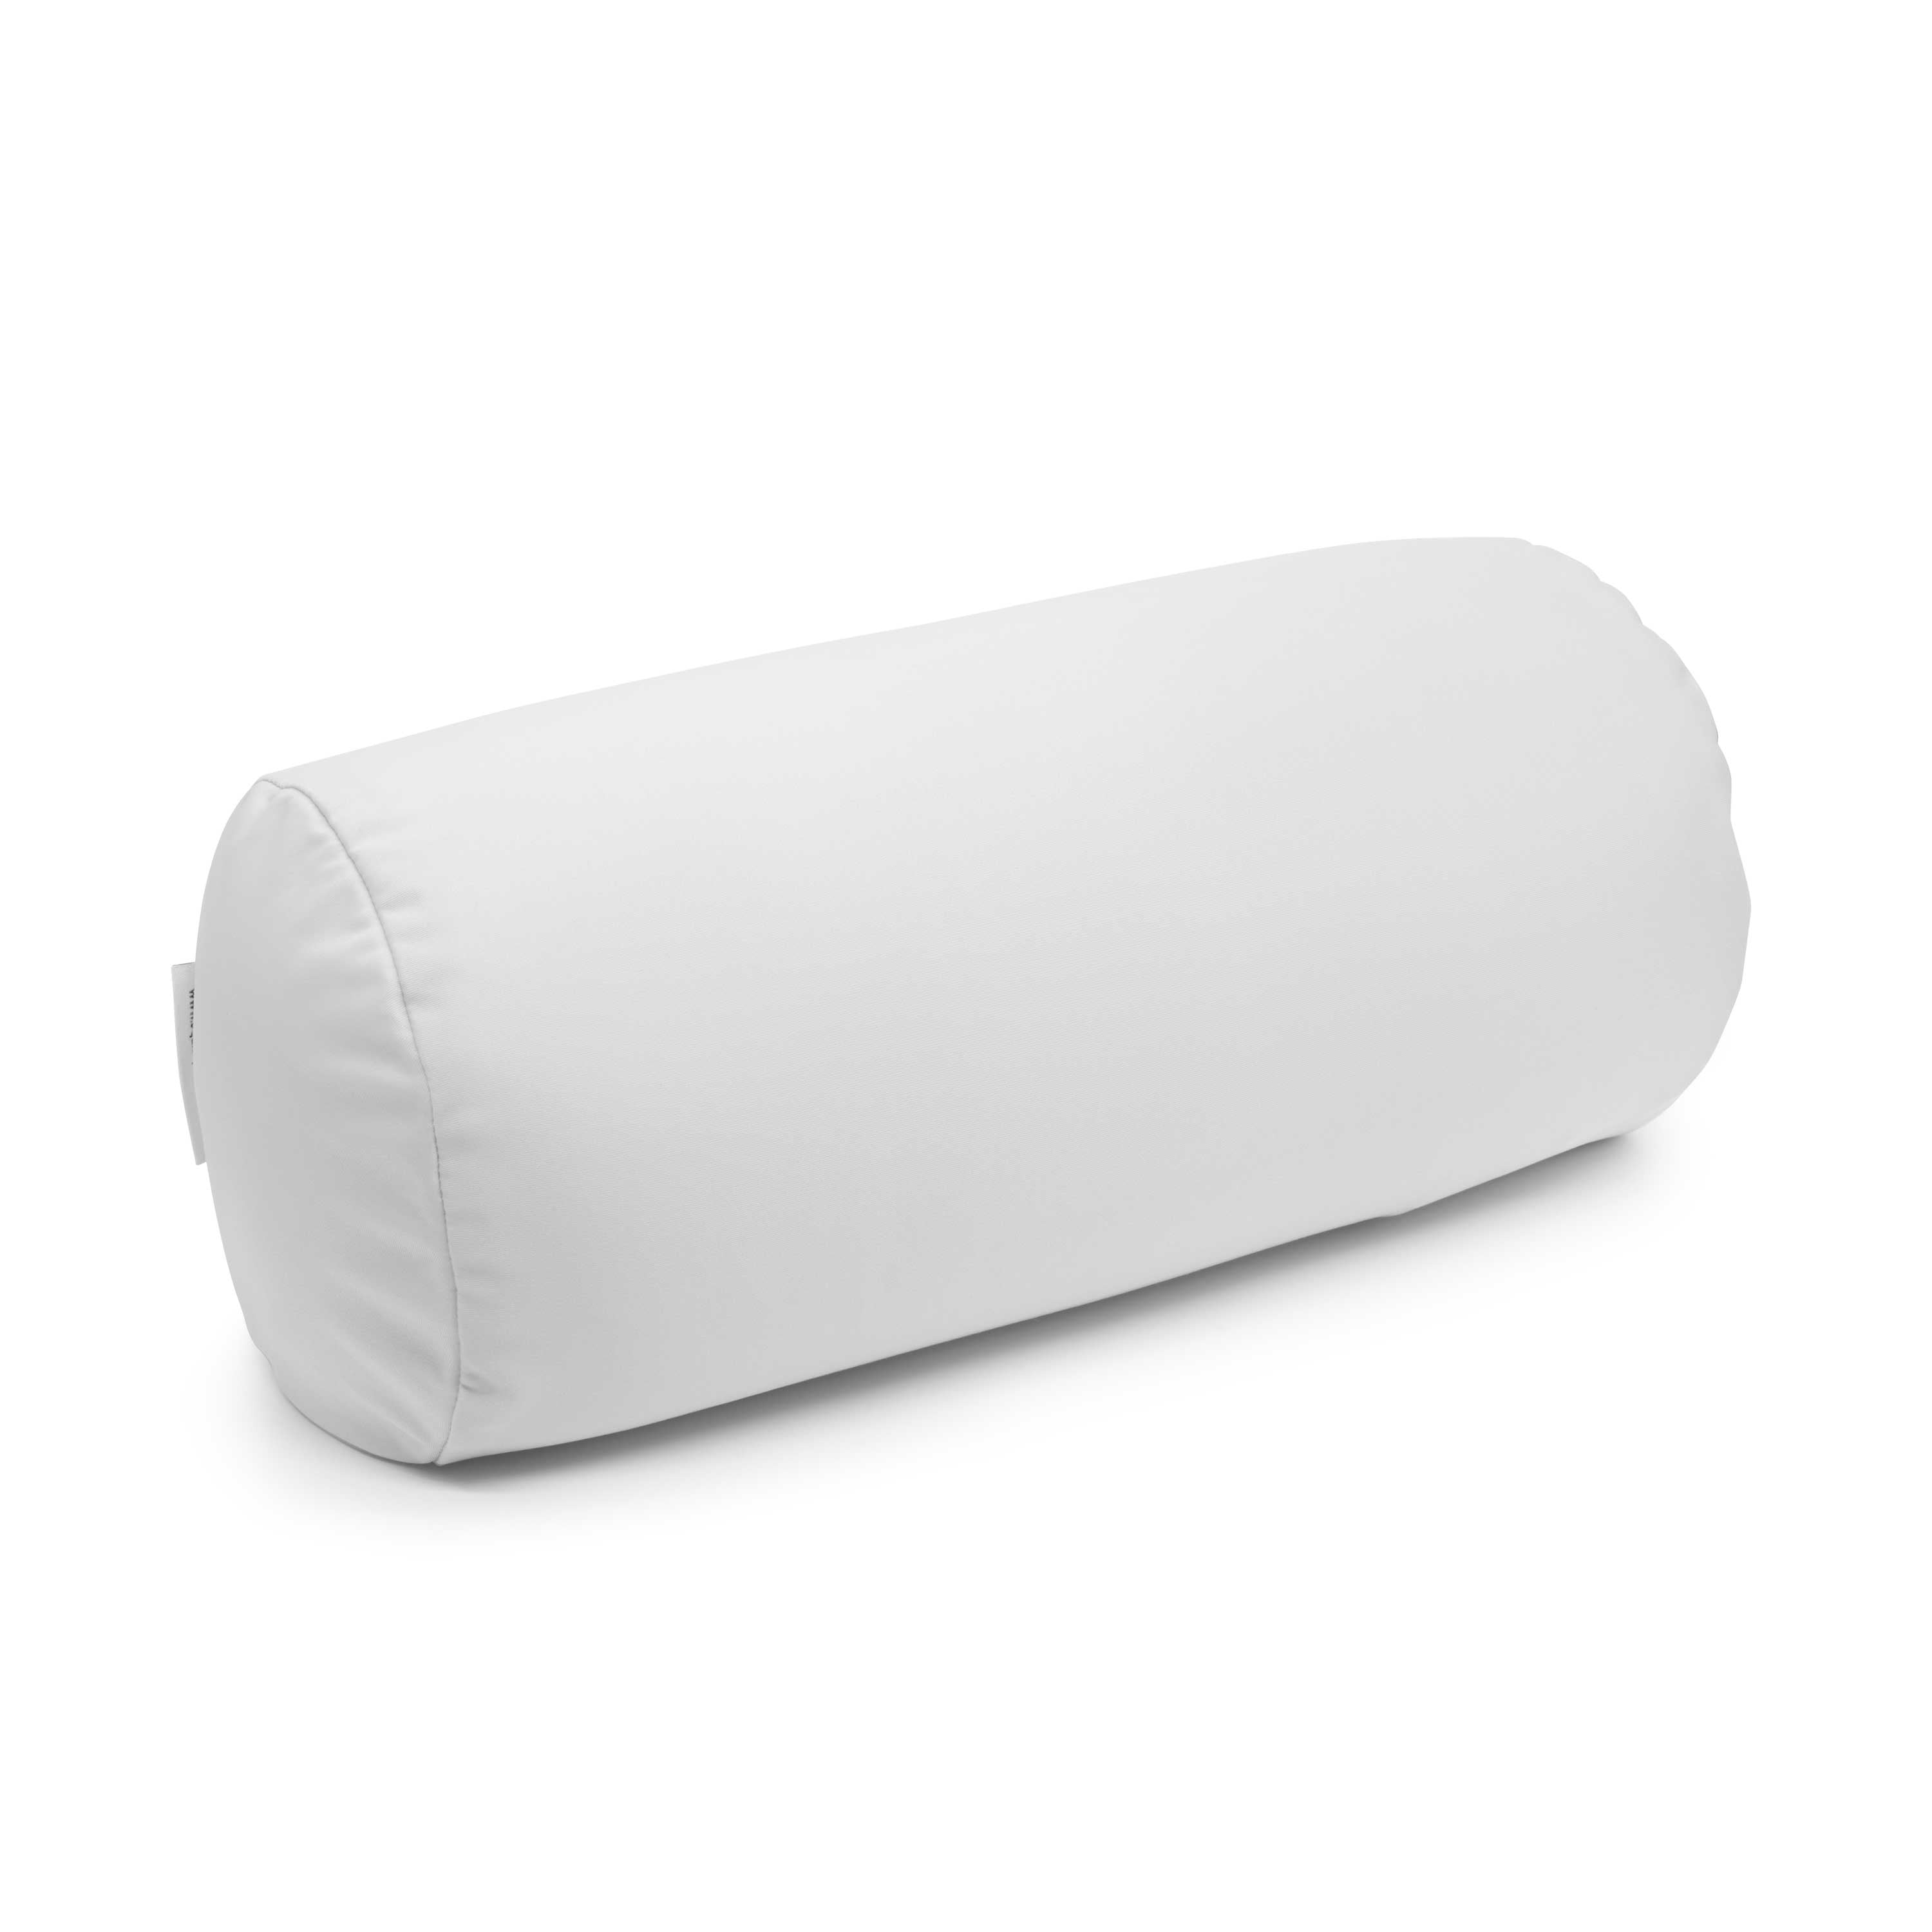 Bolster Wrap ~ Versatile, Microwavable Heated Body Pillow